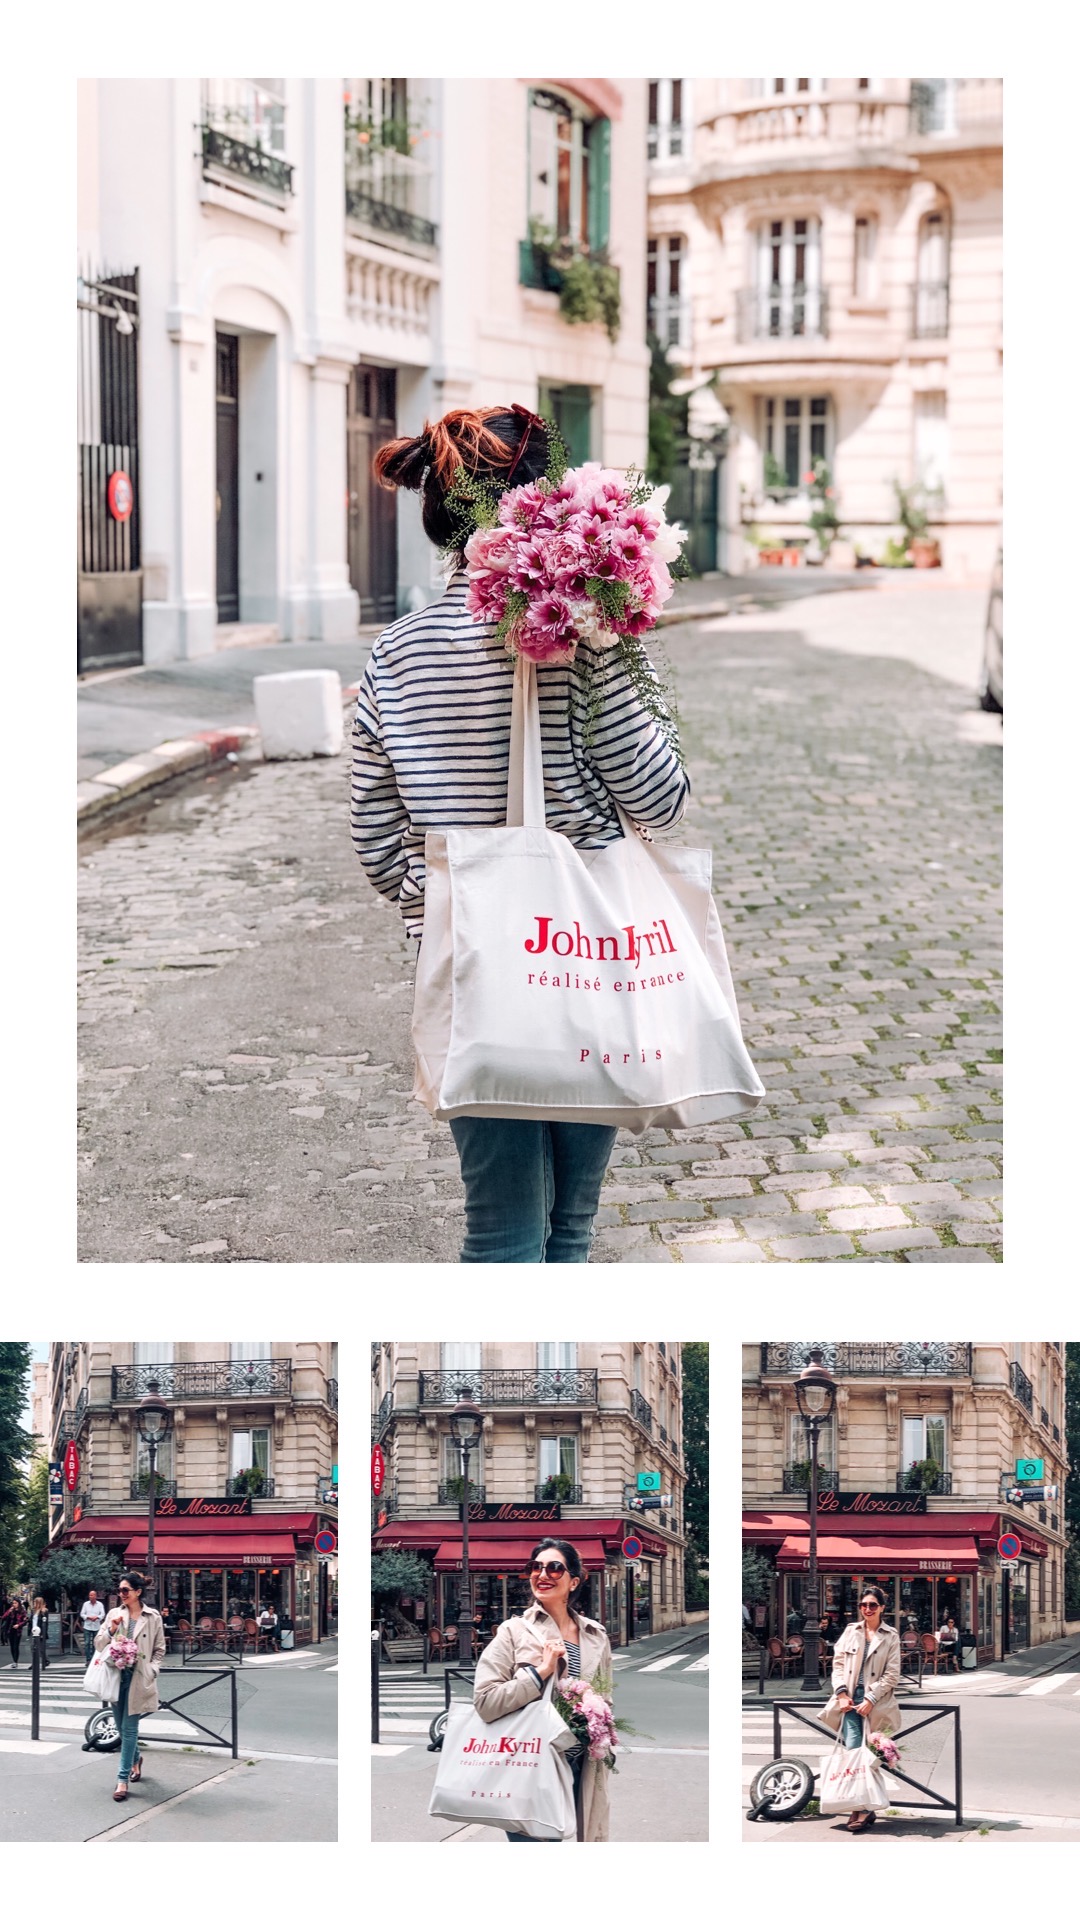 Le borse delle donne, shopping bag, JohnKyril, impastastorie Bistrot, made in france, design italiano